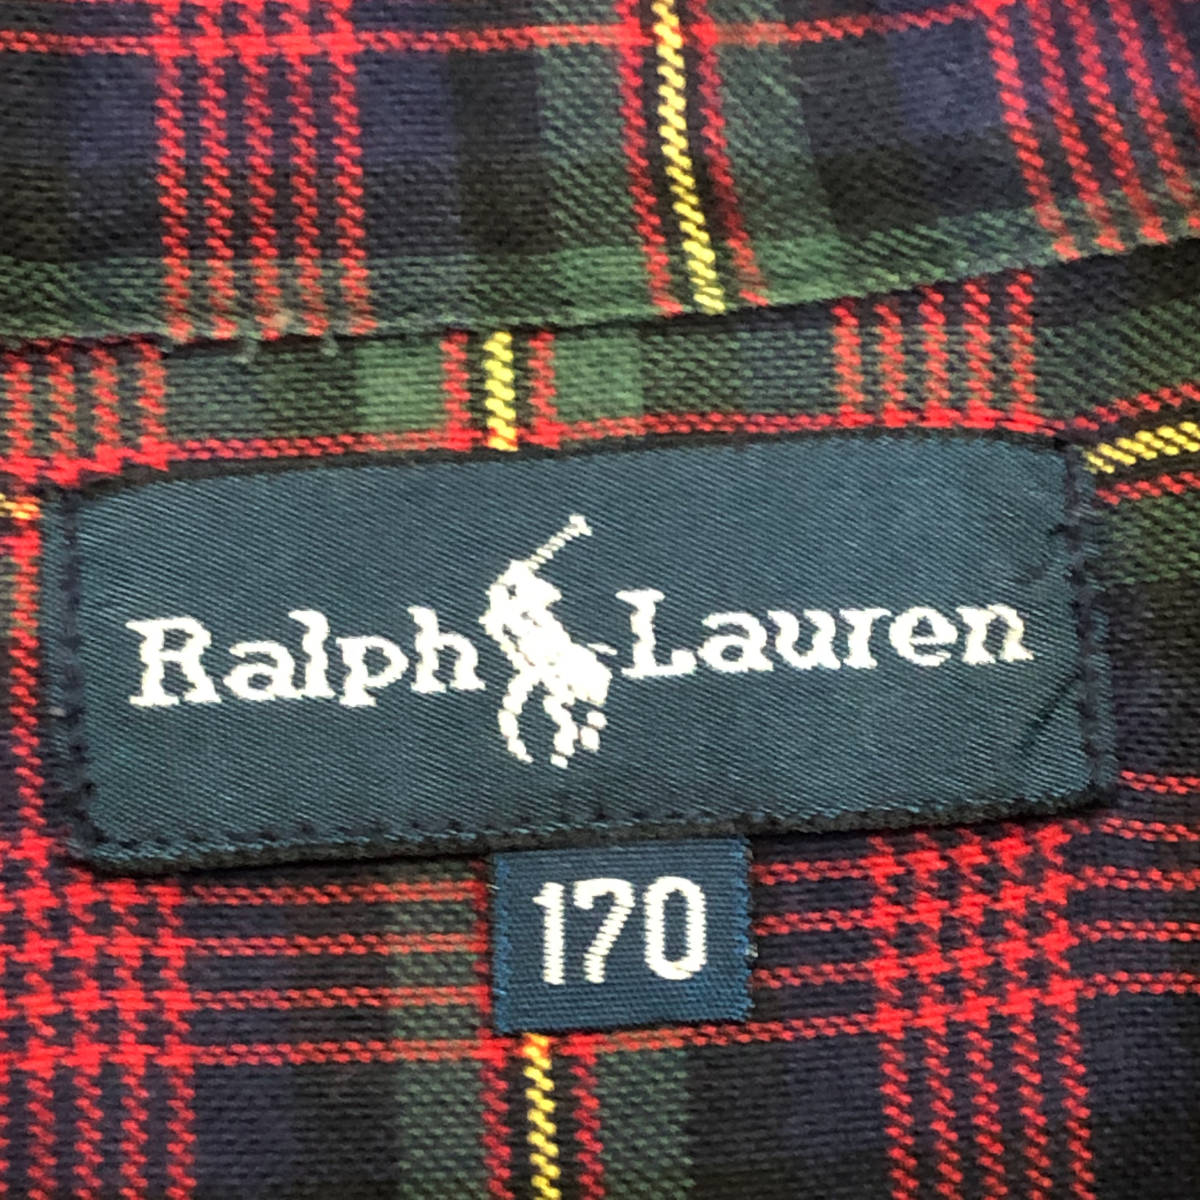 RALPH LAUREN ラルフローレン ボタンダウンシャツ チェック 長袖 170 赤 緑 ポニー刺繍 A28_画像7